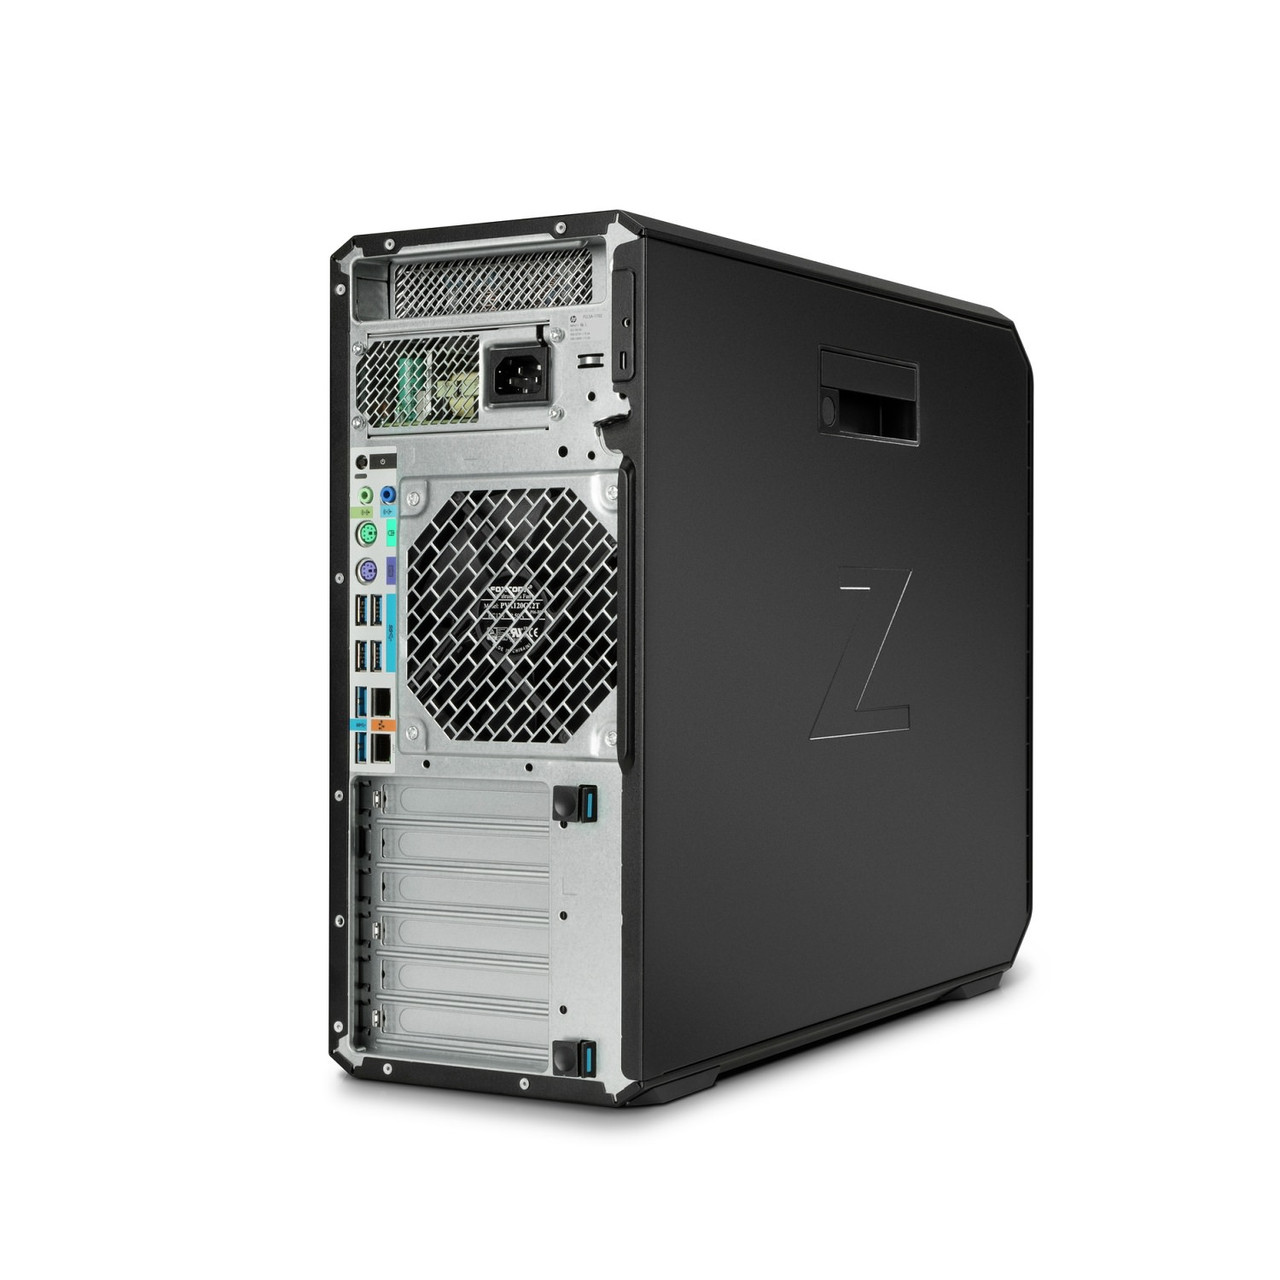 HP Z4 G4 Desktop Intel Xeon 3.60 GHz 8 GB 256 GB SSD W10P | Refurbished